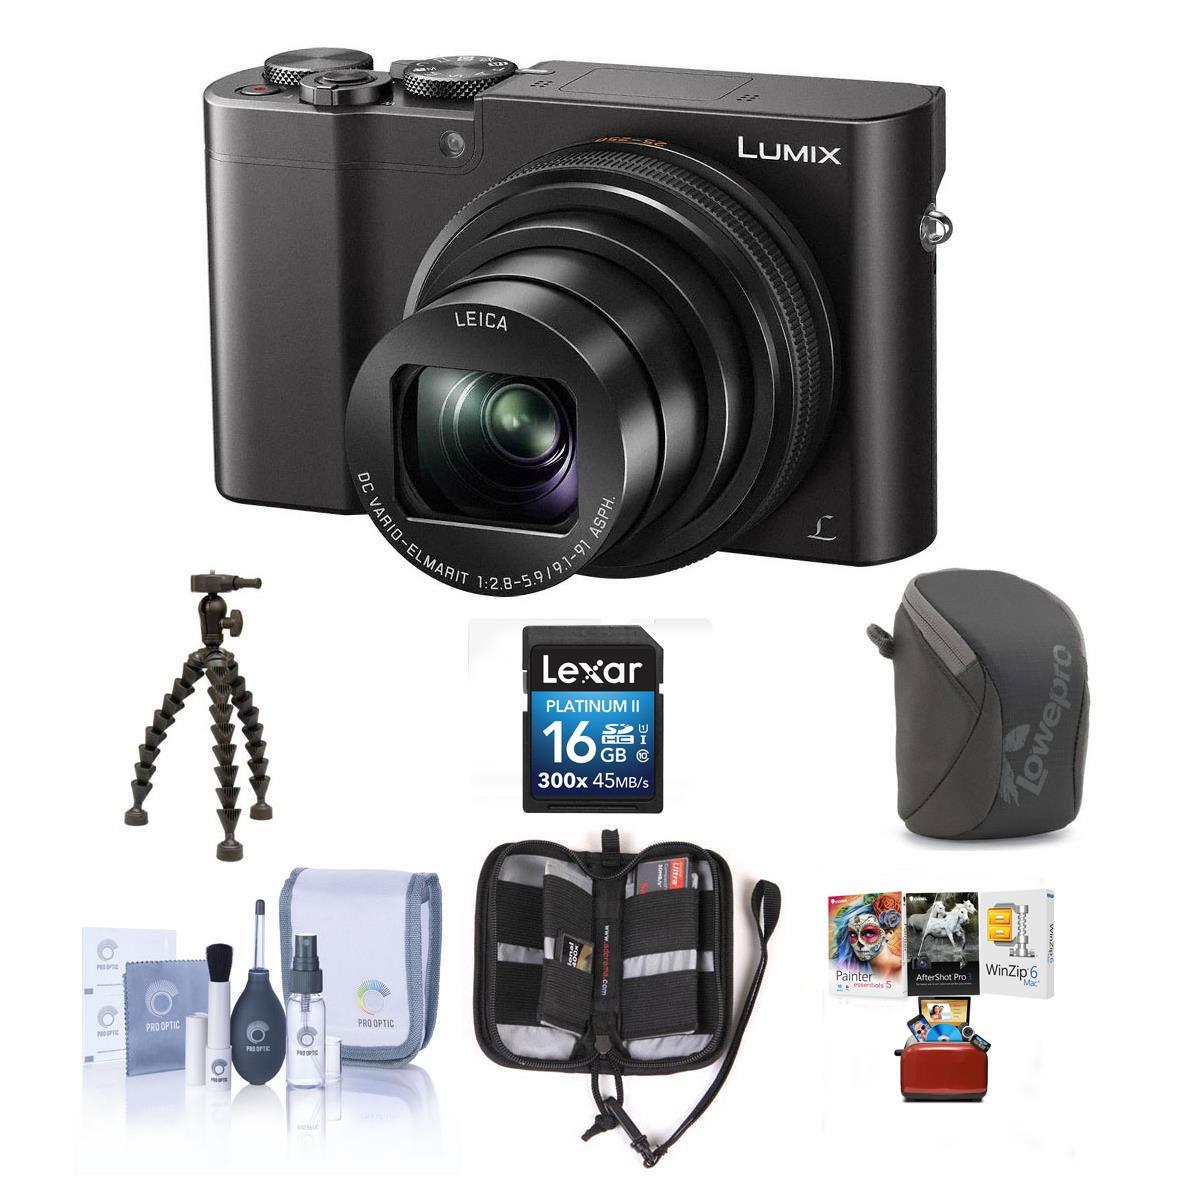 Panasonic Lumix DMC-ZS100 Digital Camera with Free MAC Accessory Bundle, Black